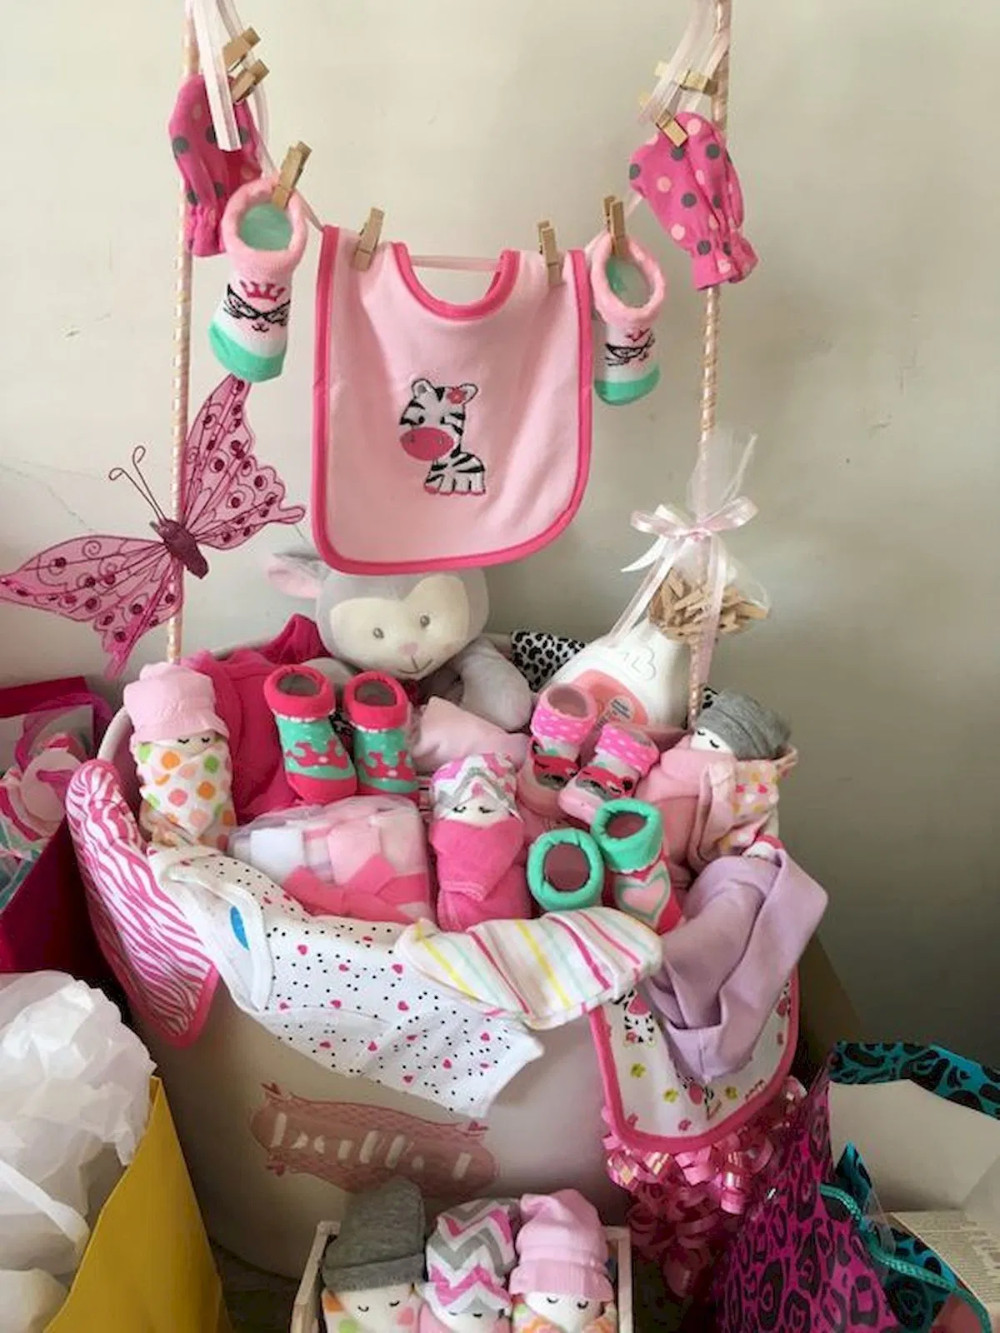 Gift Ideas For Toddler Girls
 60 Cute Baby Shower Gift Ideas For Baby Girls 35